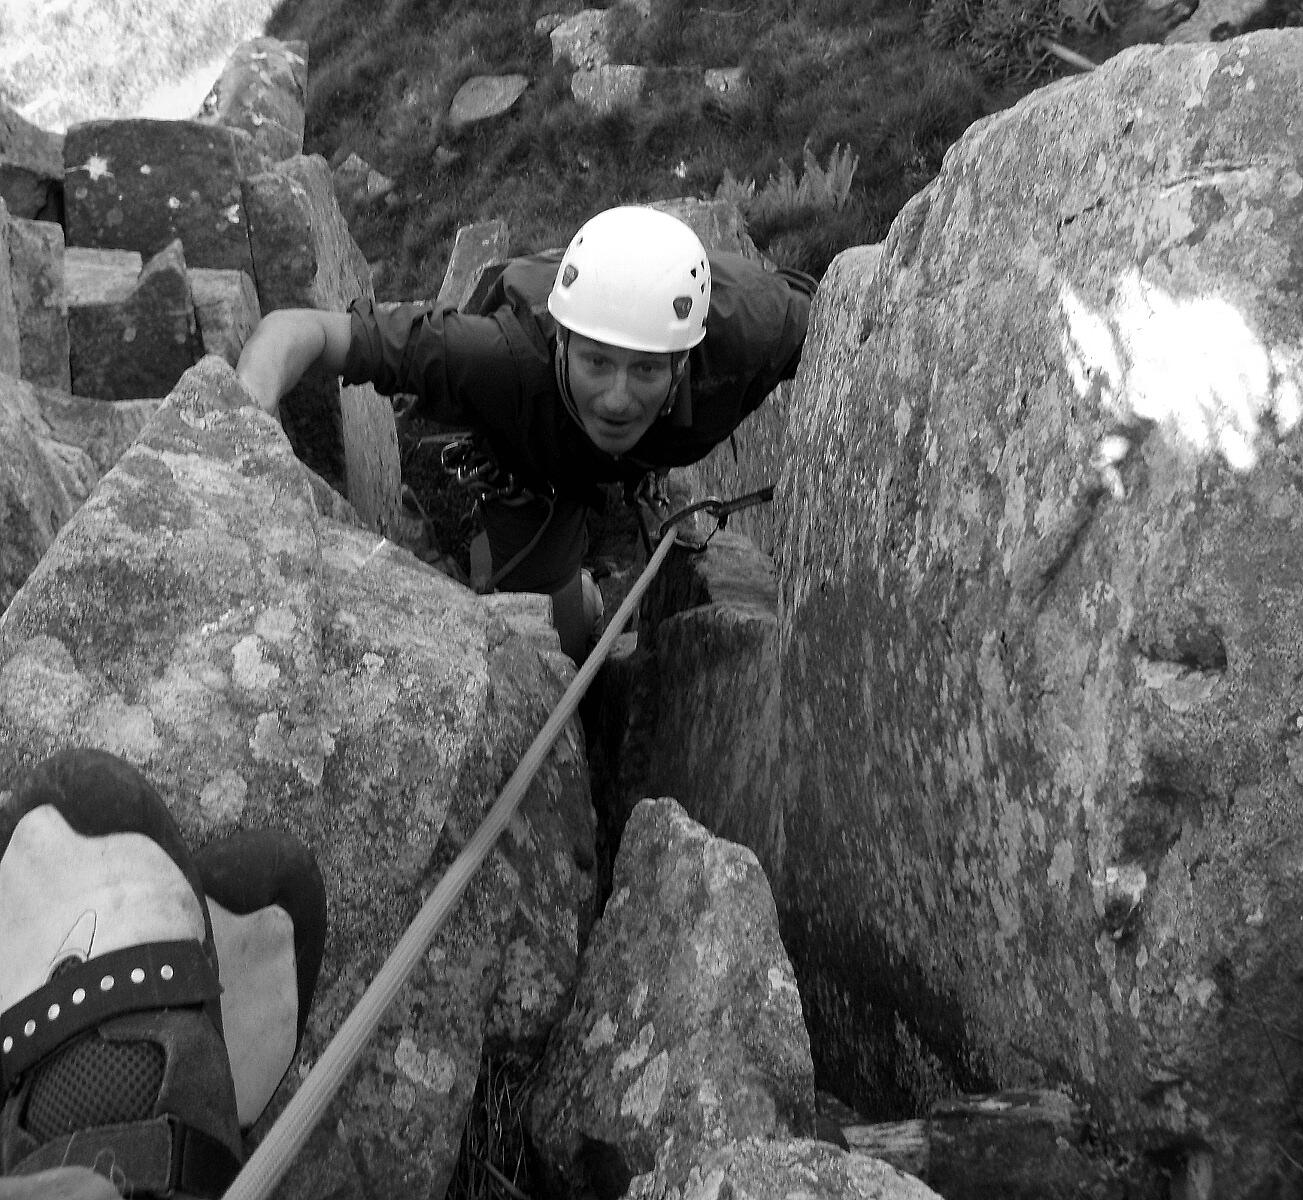 Steves first rock climb